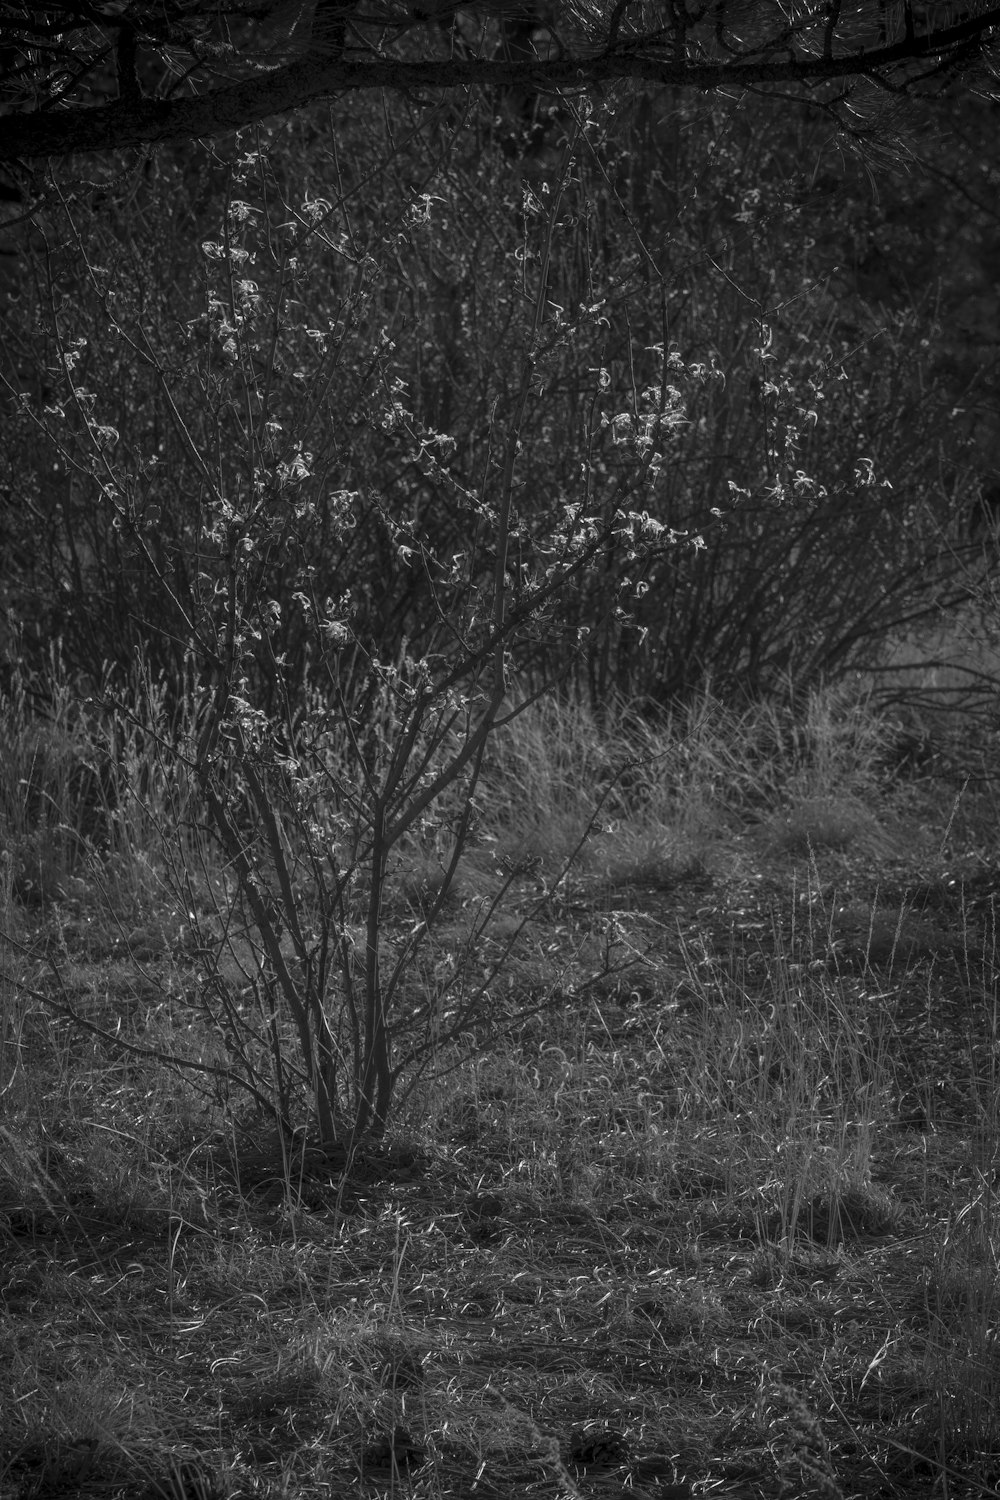 a black and white photo of a small bush